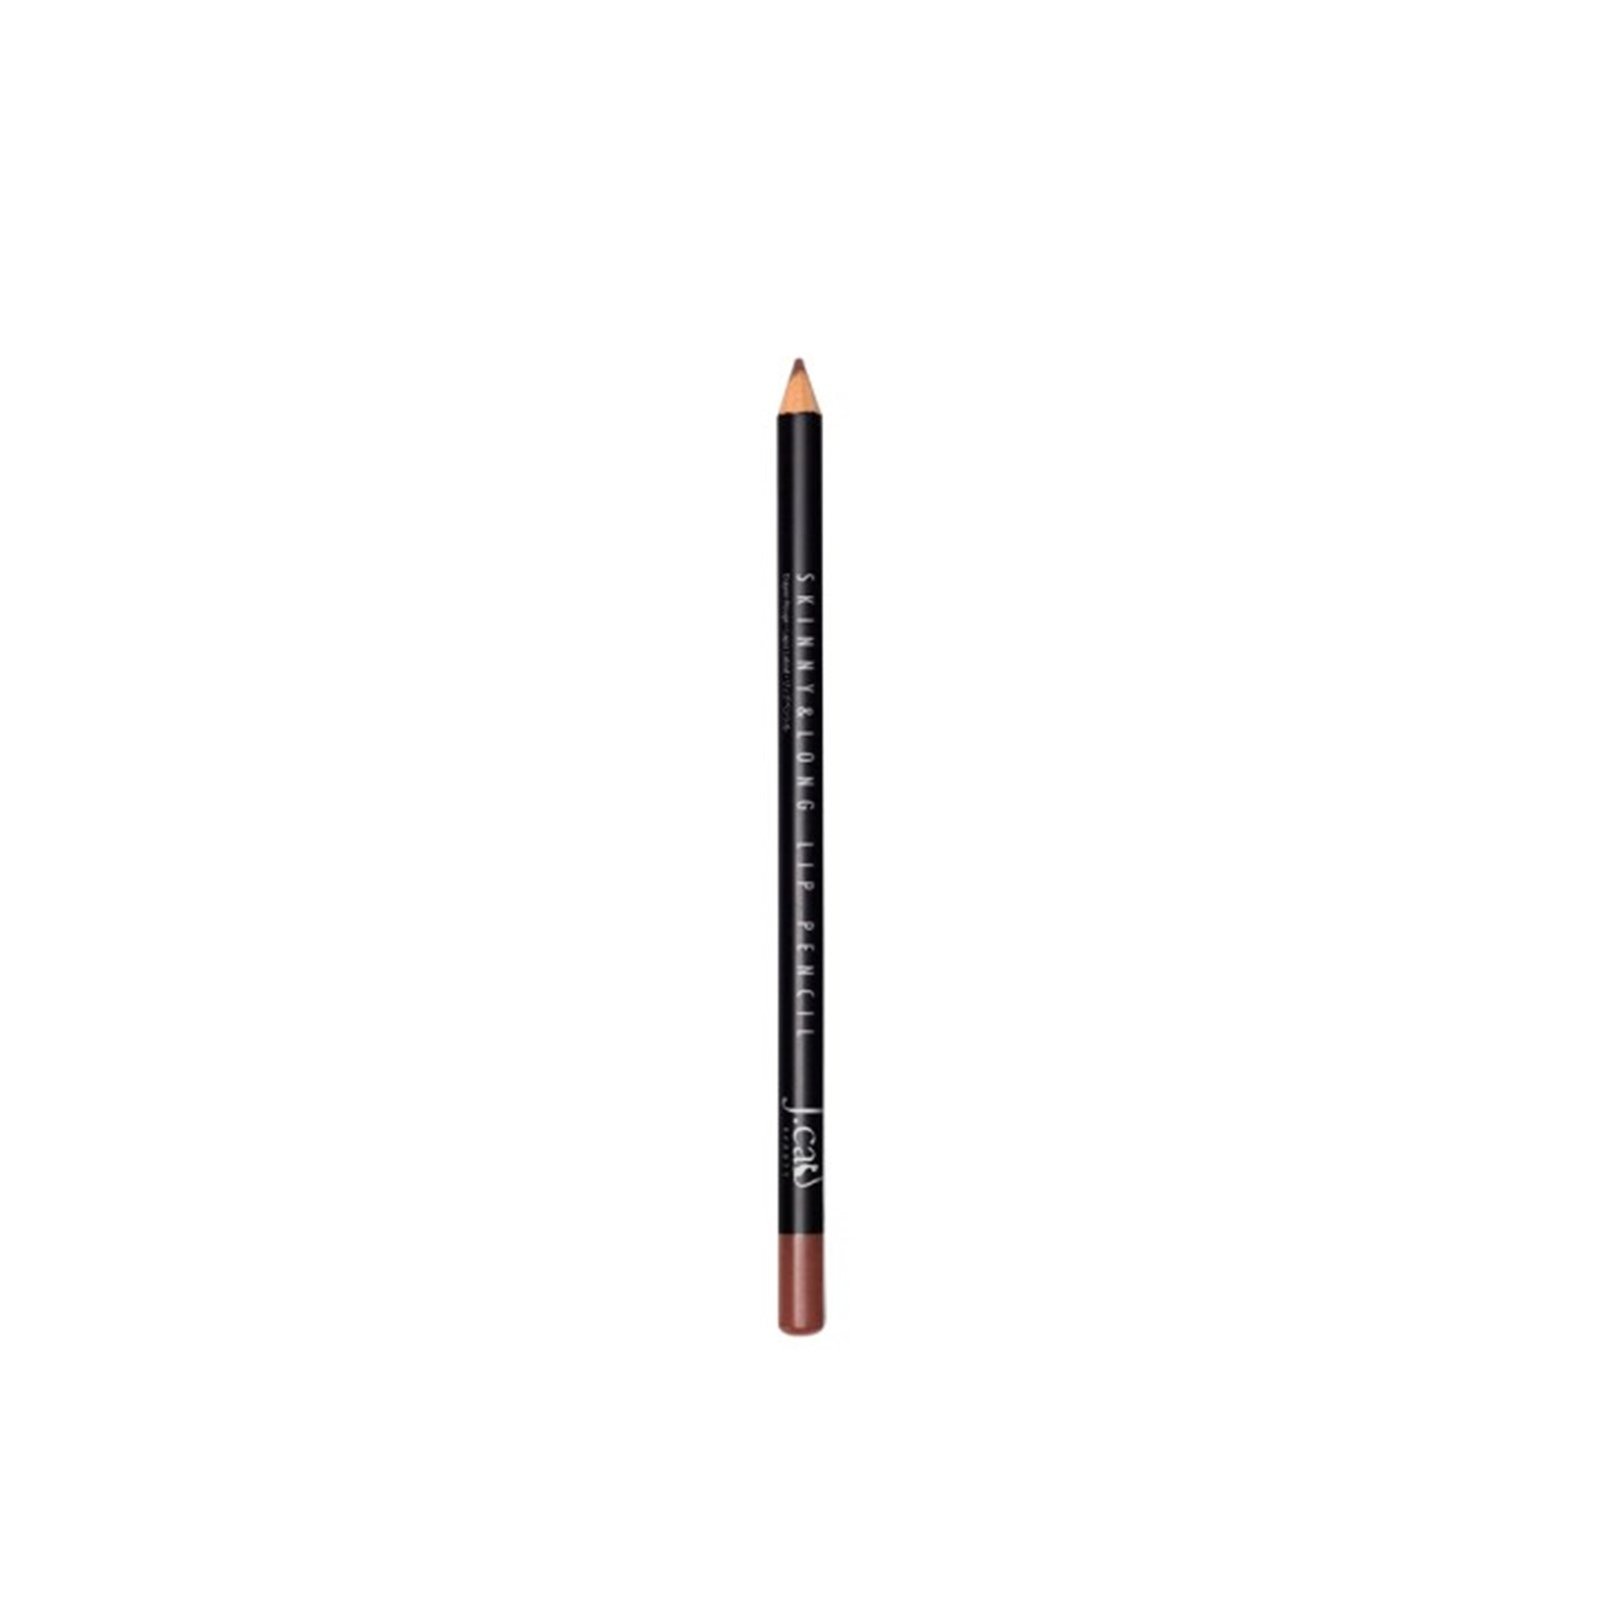 J.Cat Skinny & Long Lip Pencil 101 Tea Rose 2g (0.08 oz)